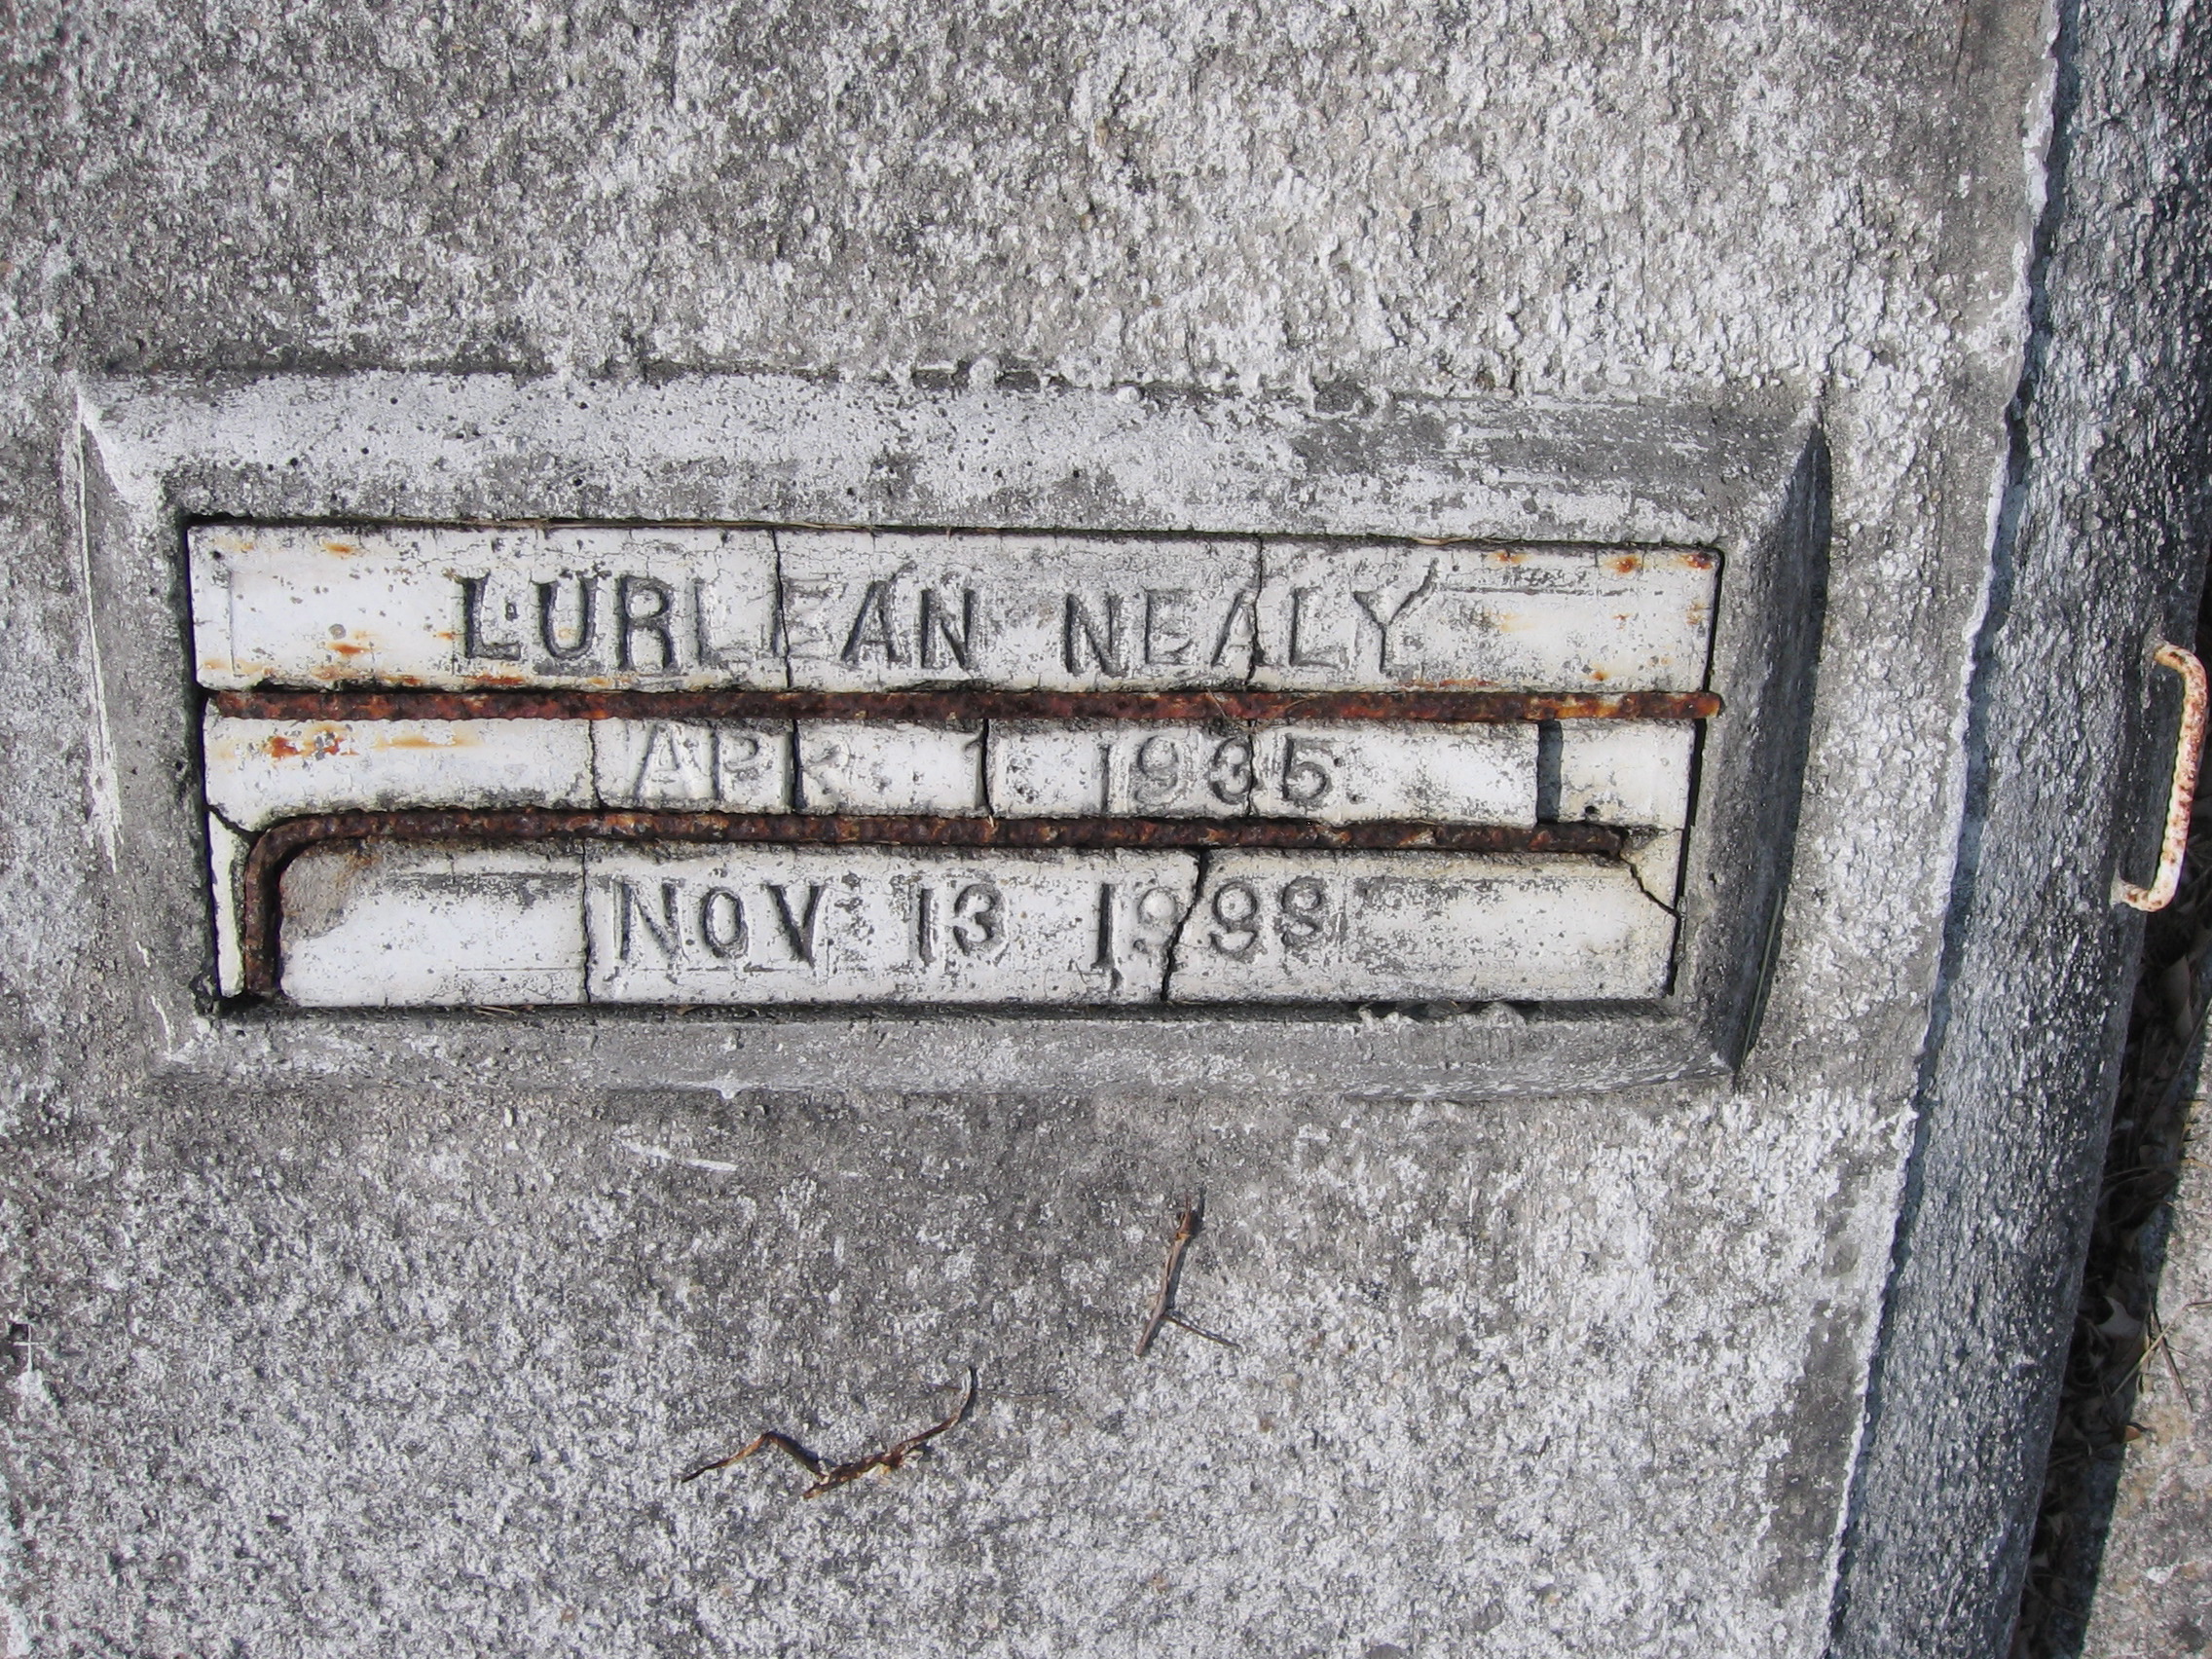 Lurlean Nealy